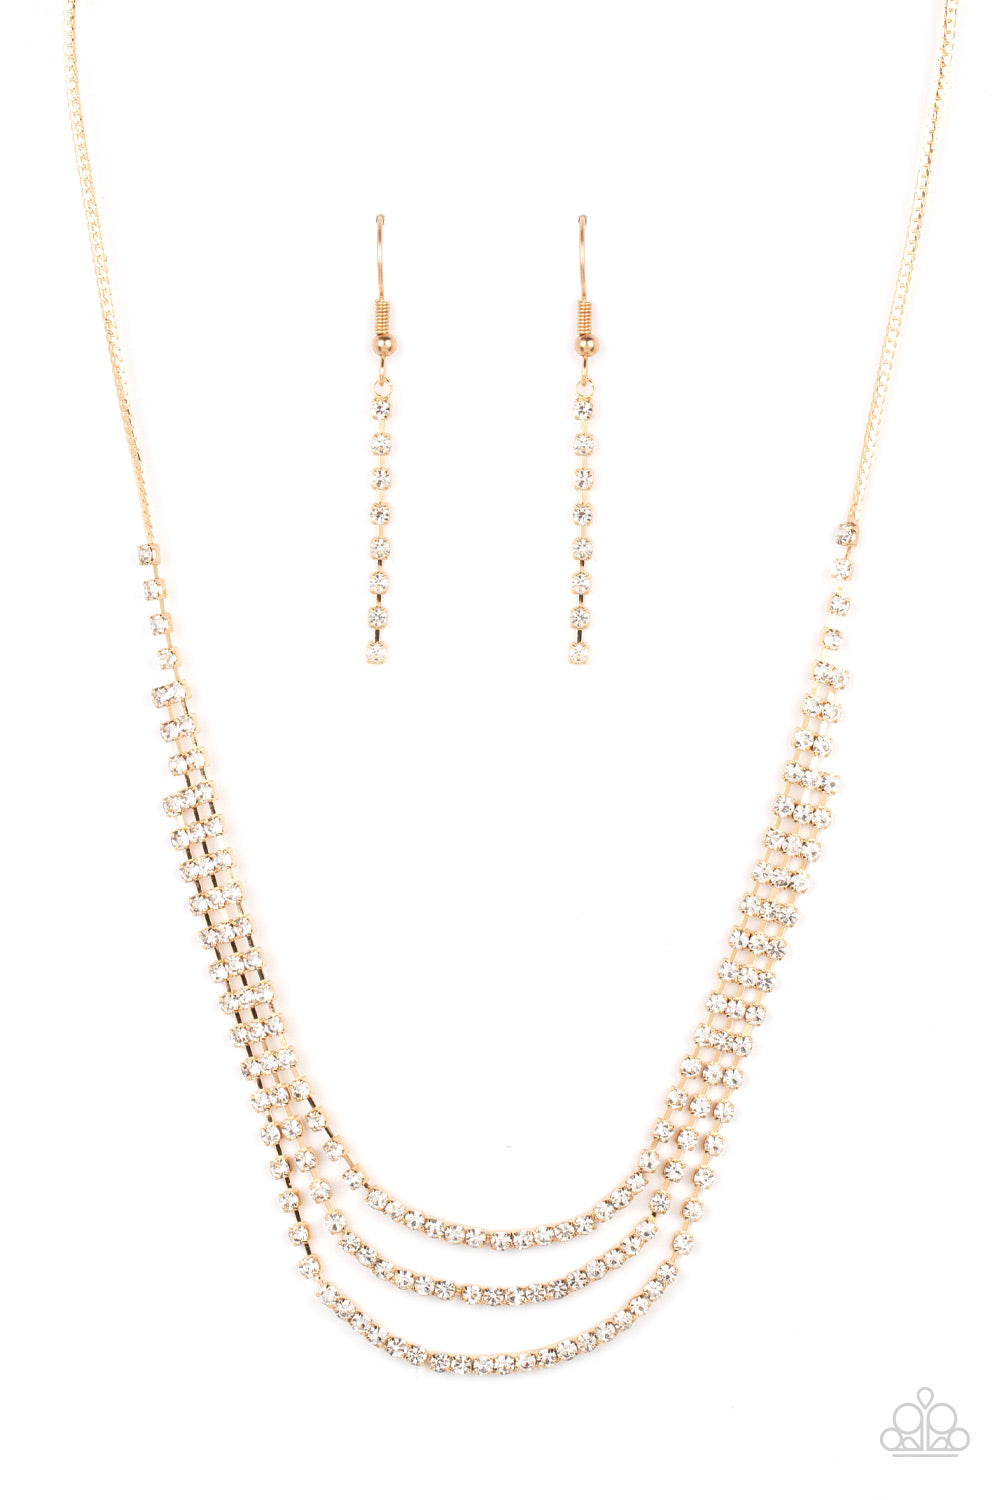 Surreal Sparkle Necklace (White, Gold, Multi)